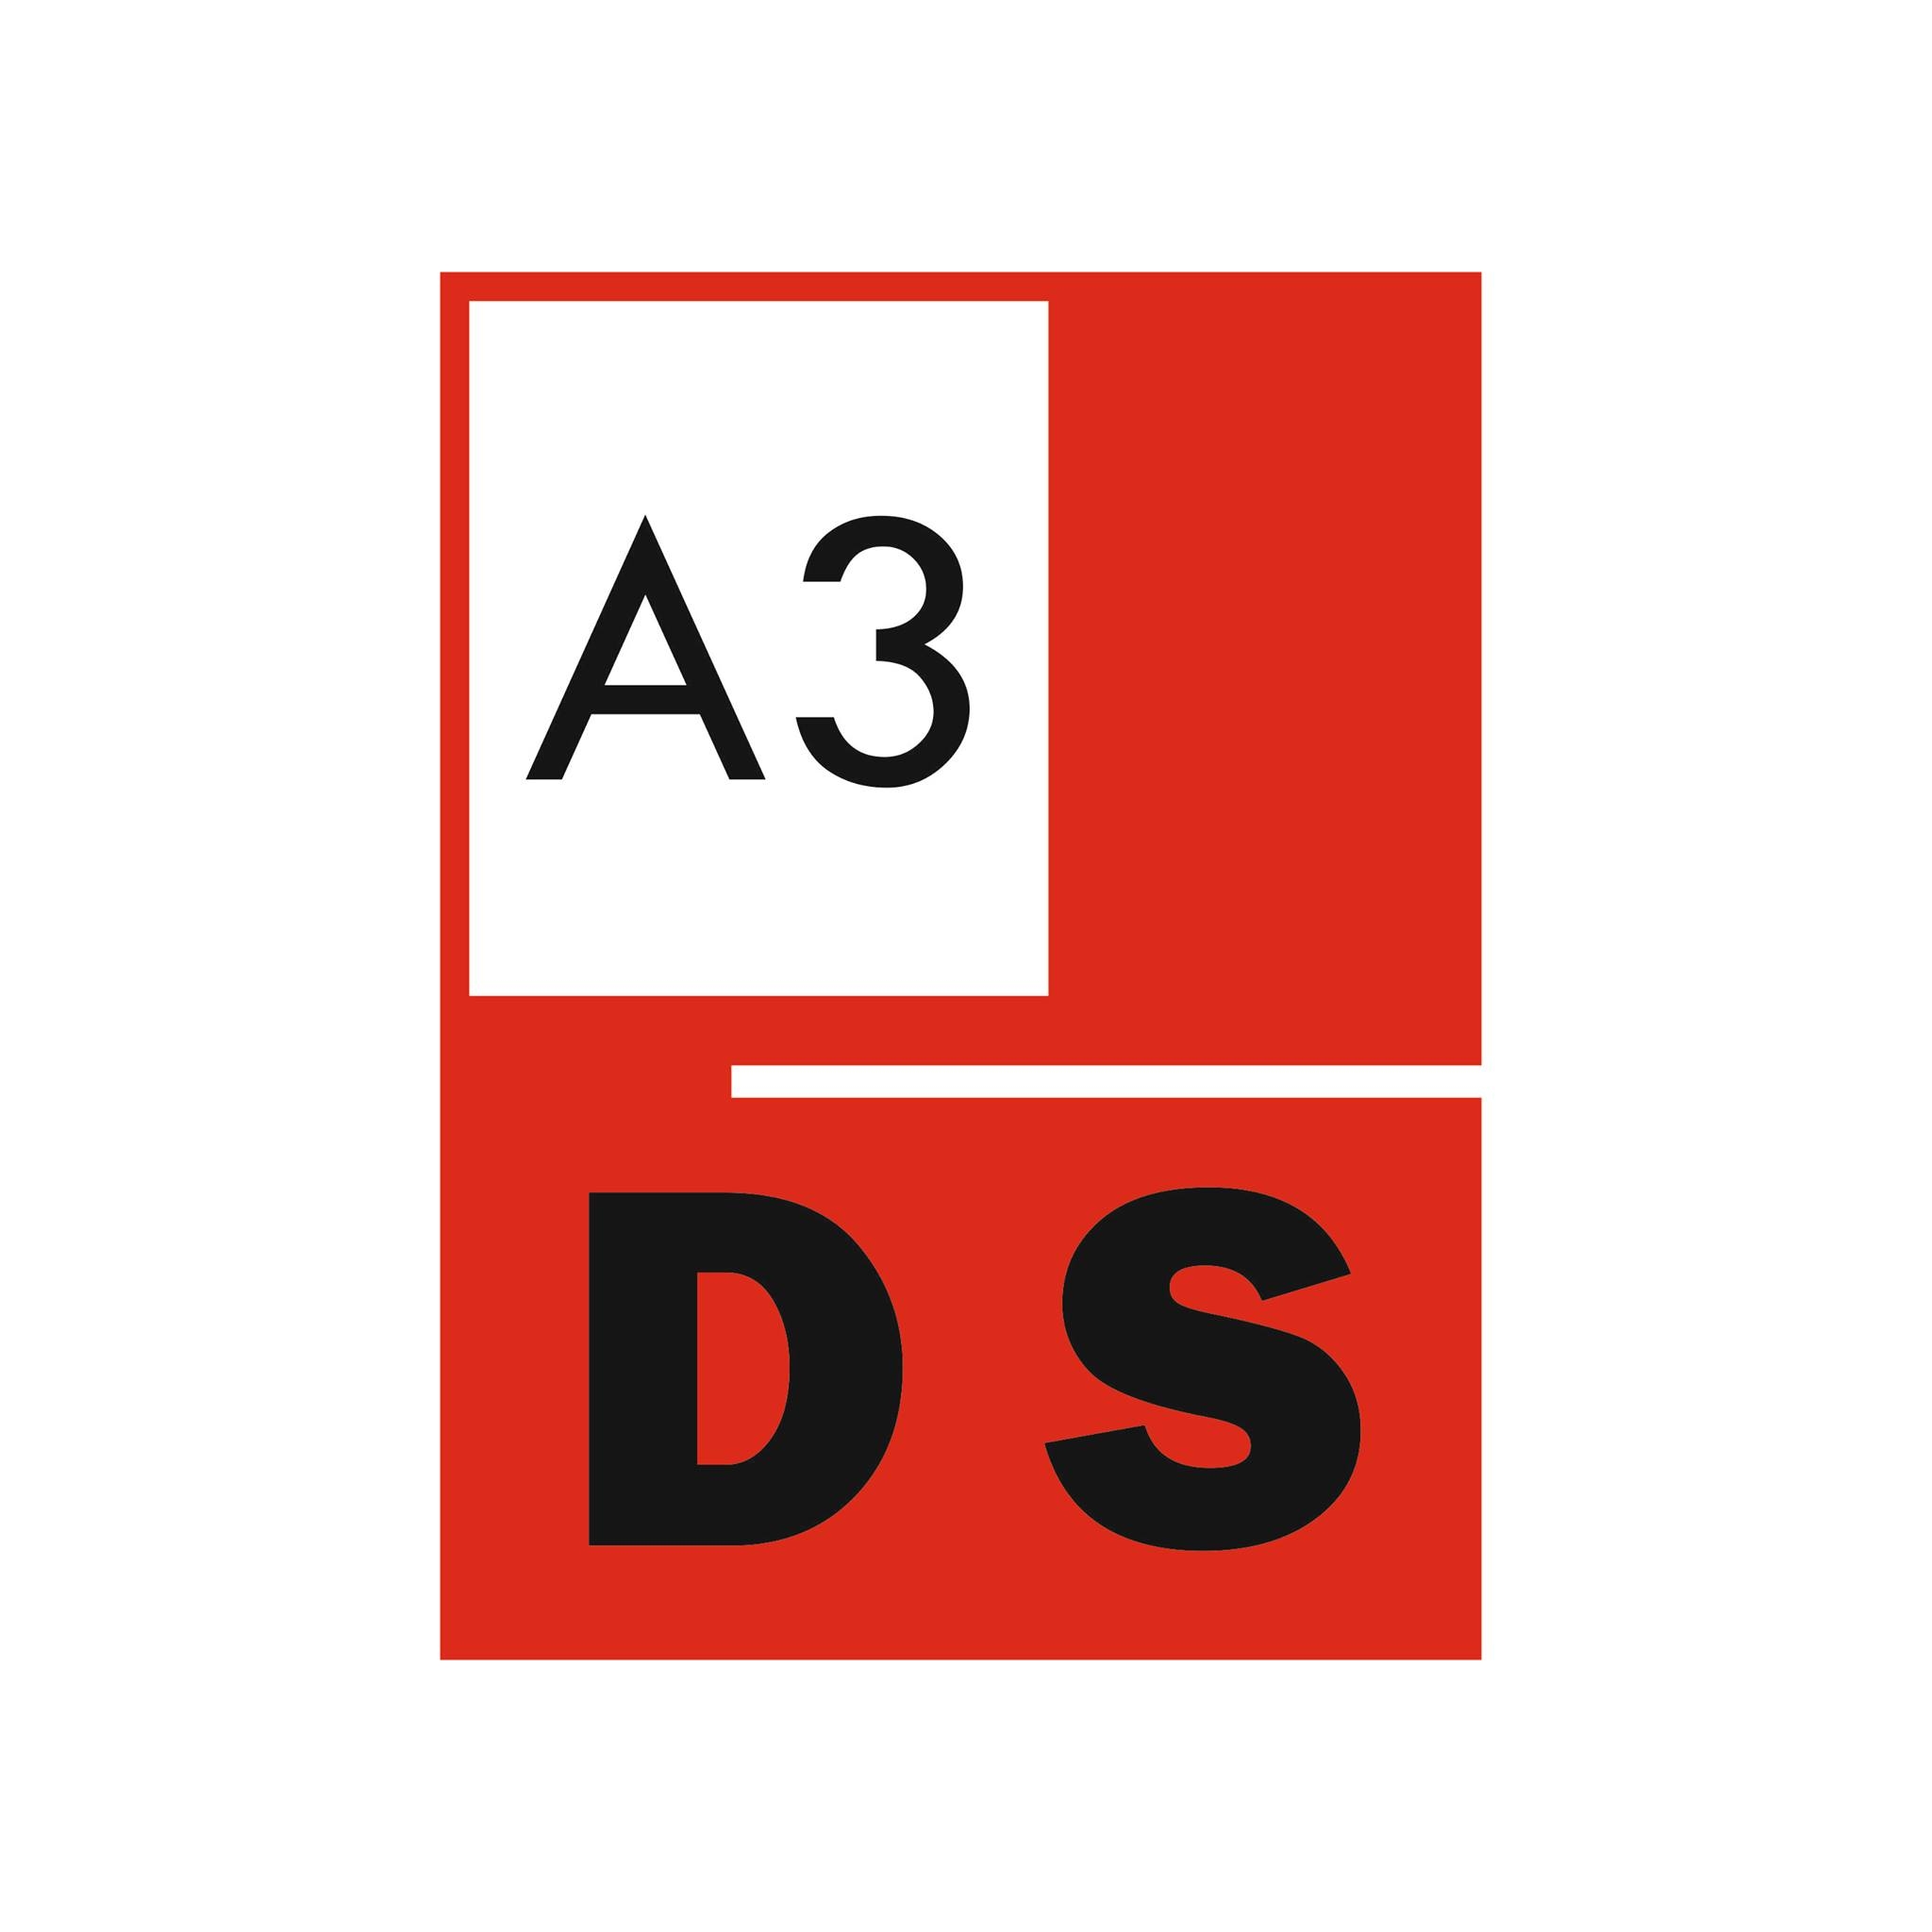 a3 design studio|Architect|Professional Services